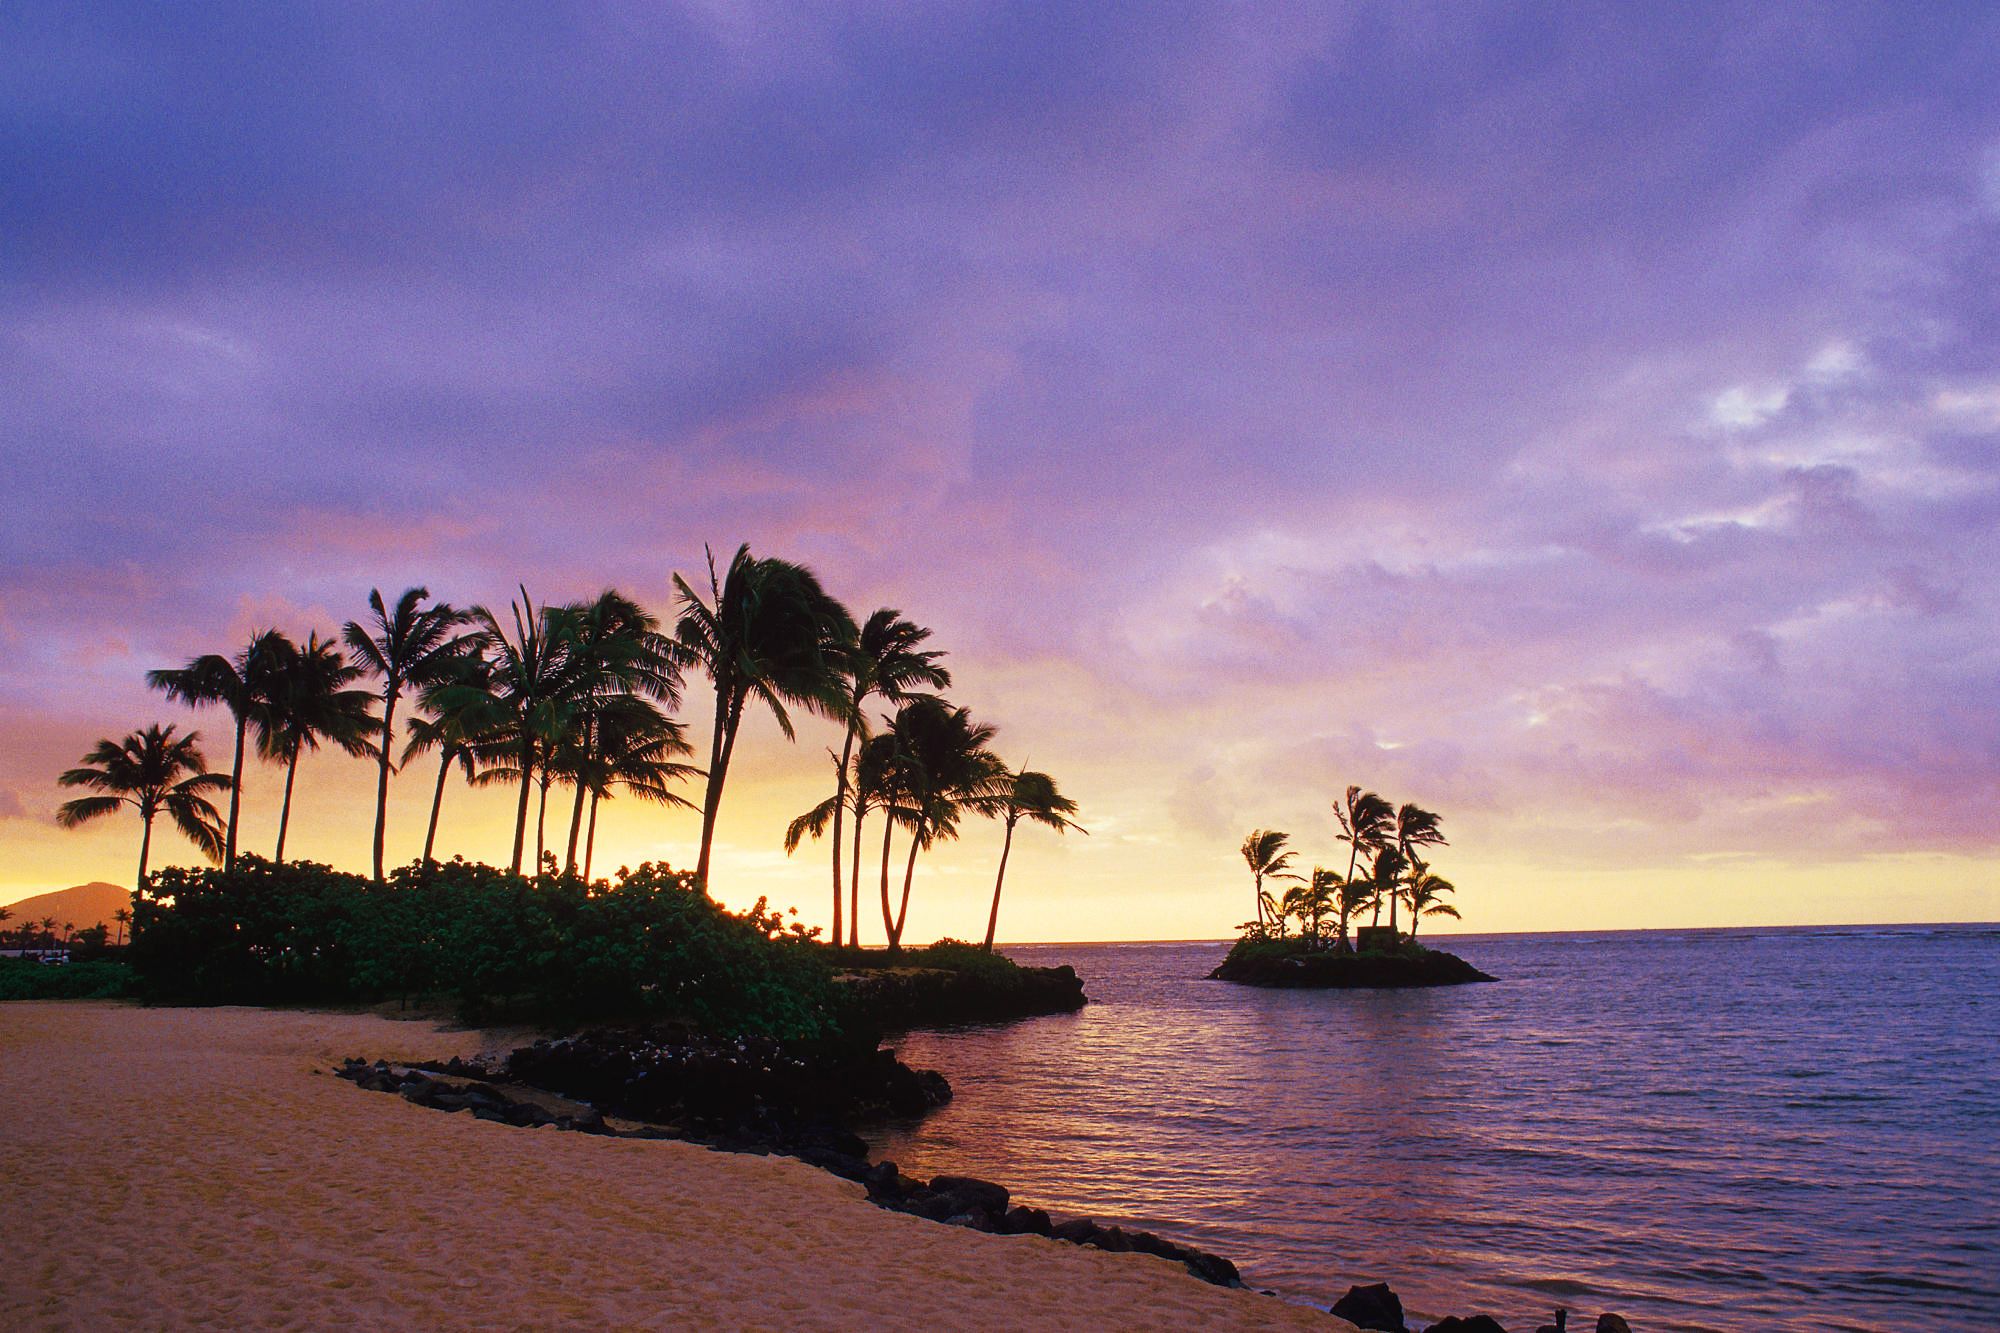 The inspiring wallpaper of the Waialae Beach, Honolulu, Hawaii #beach # wallpaper #sky #palms #hawaii #oahu. Hawaii beaches, Sunset beach hawaii, Oahu beaches